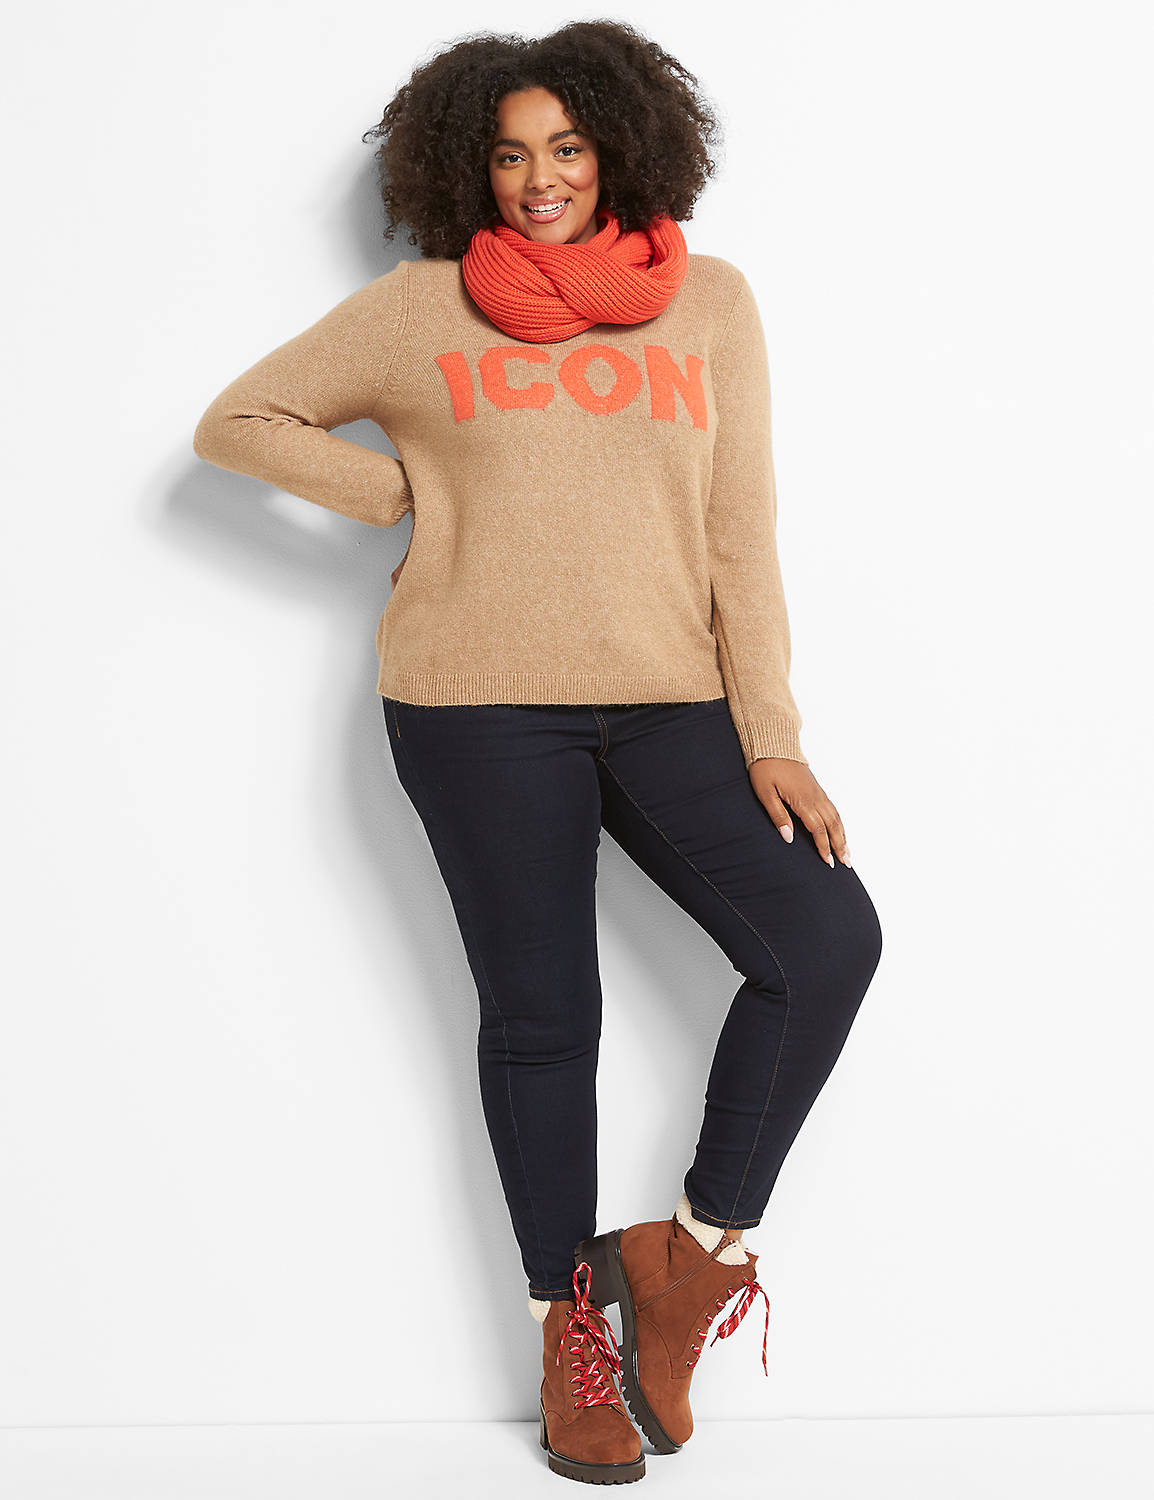 Crew-Neck Icon Sweater Product Image 3